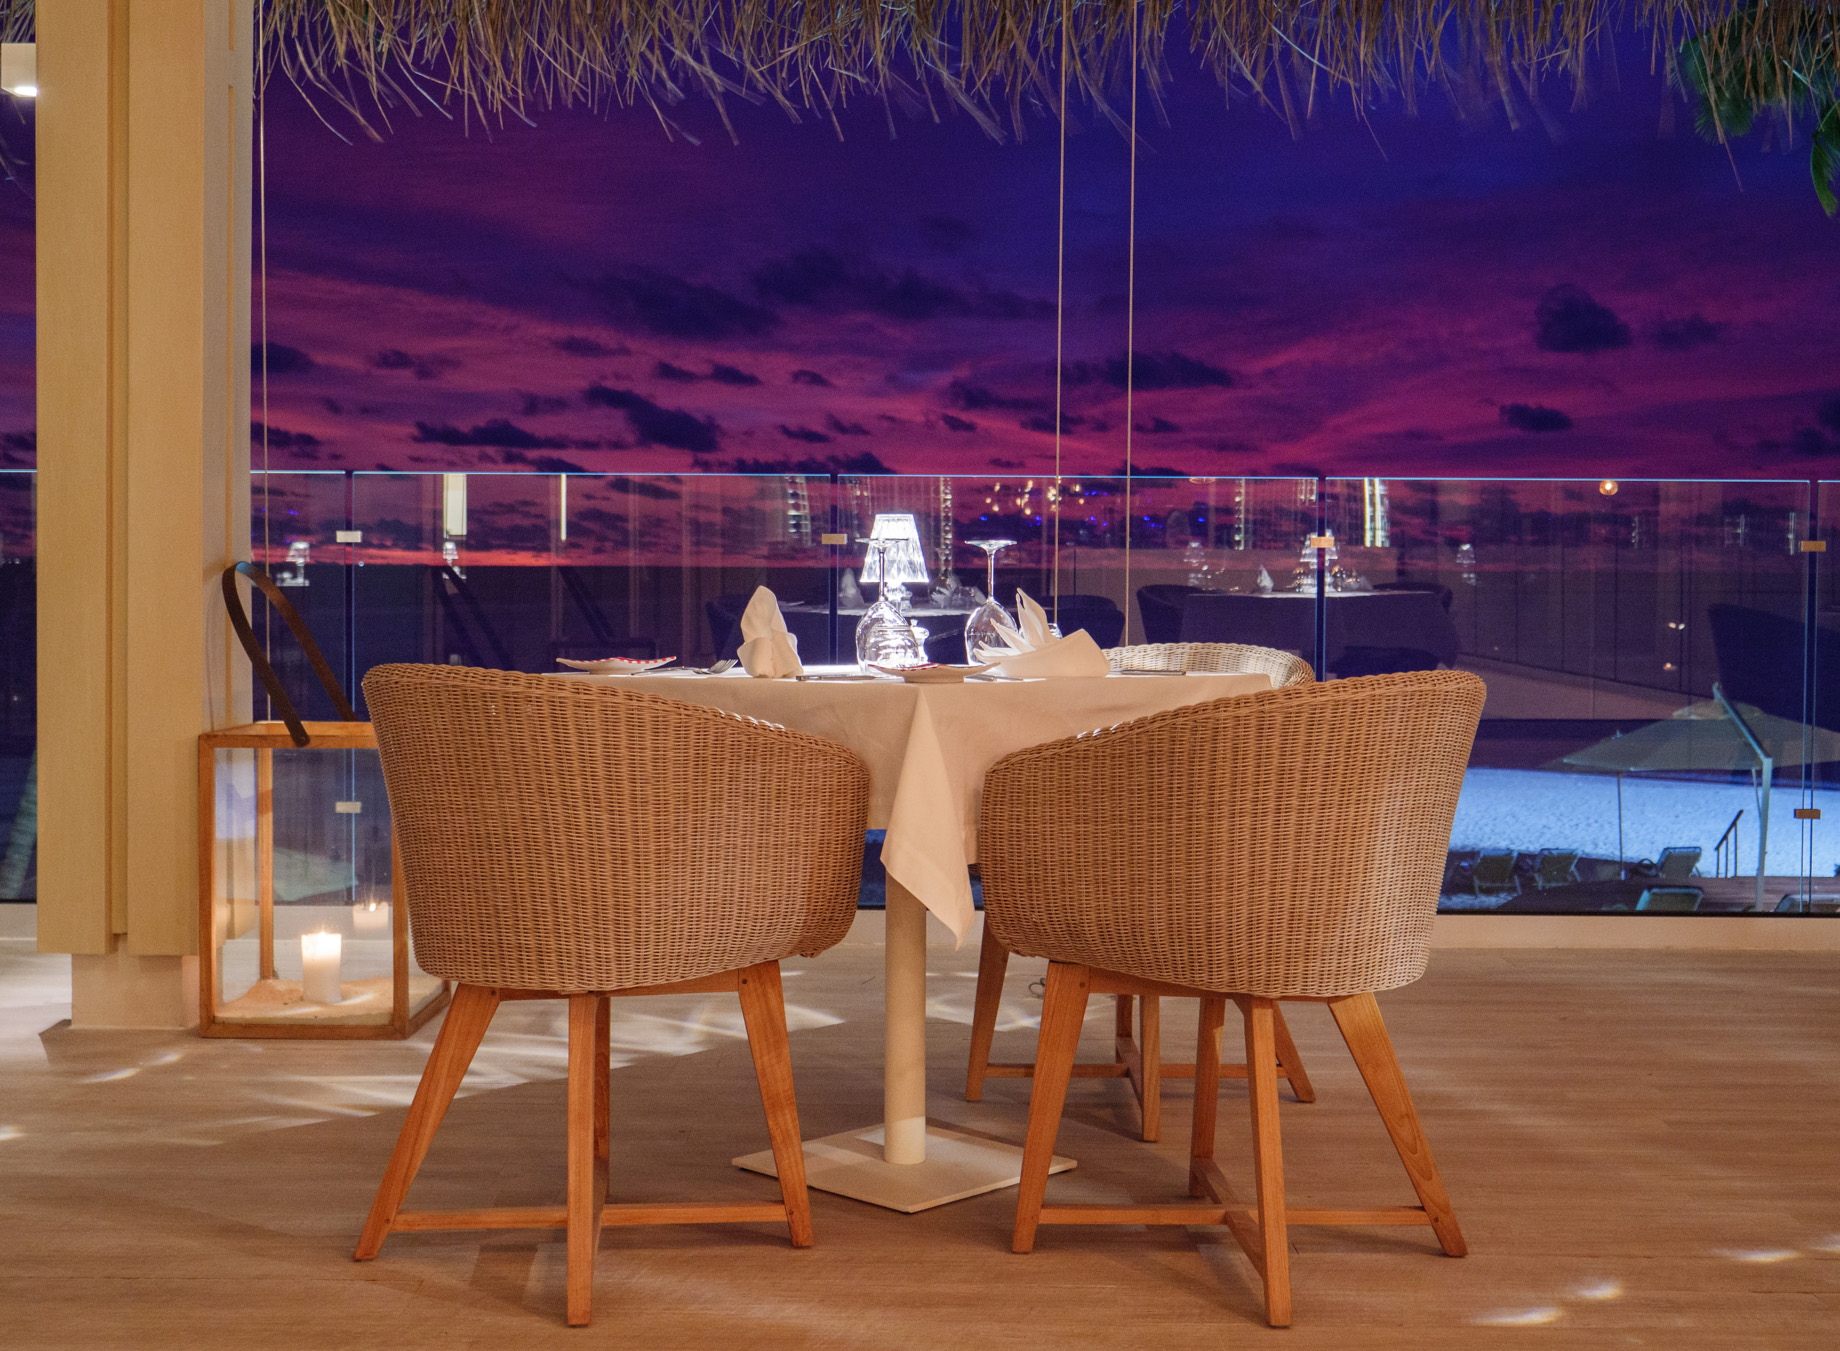 Baglioni Resort Maldives – Maagau Island, Rinbudhoo, Maldives – Gusto Restaurant Evening Dining